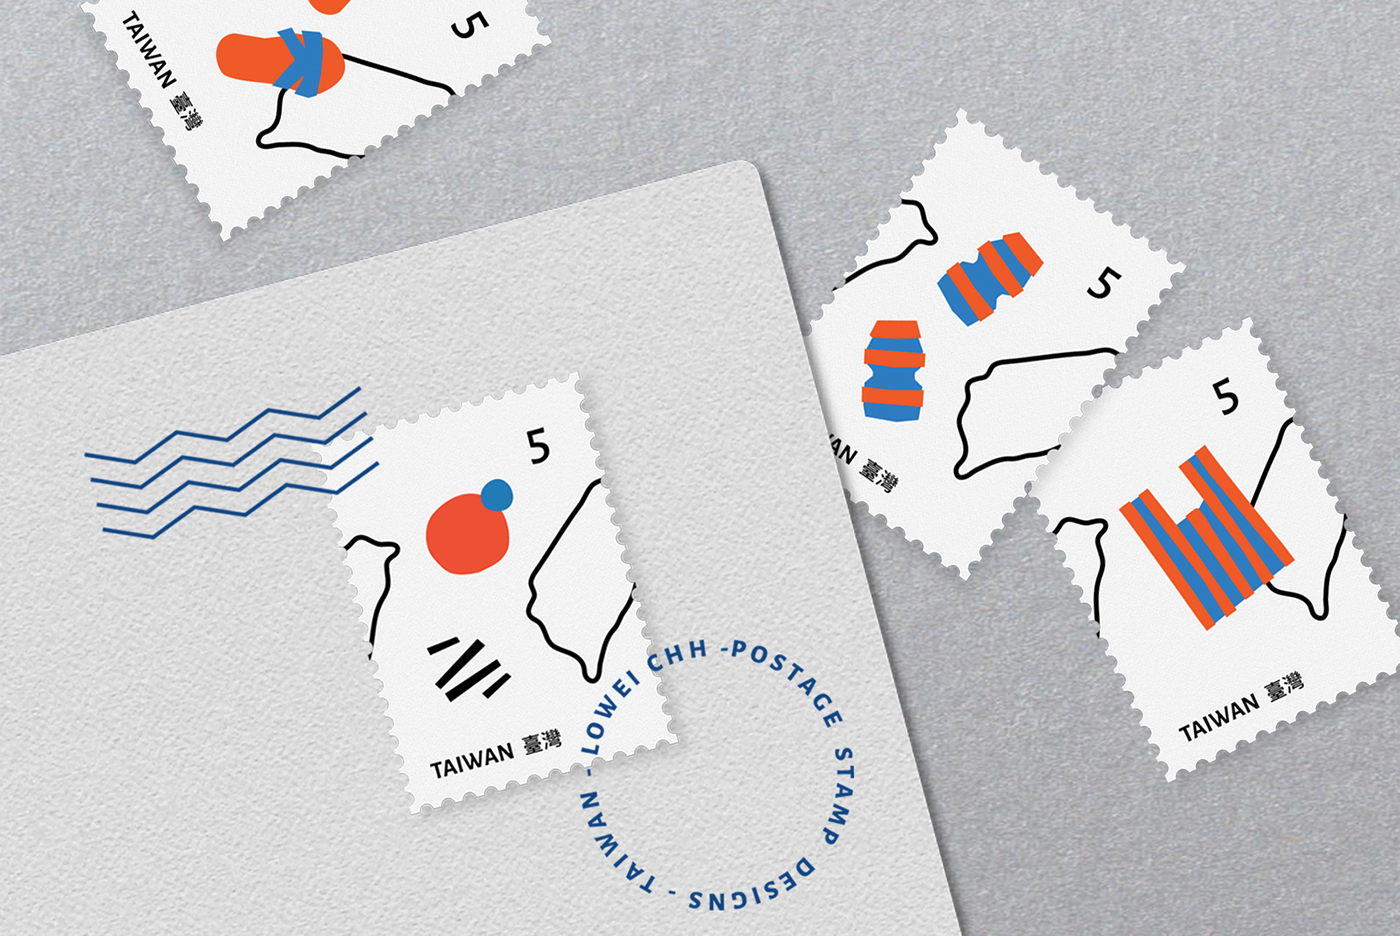 motiongraphic graphicdesign design VisualDesign Postage Stamp Design postage design stamps design poster artdesign photographics